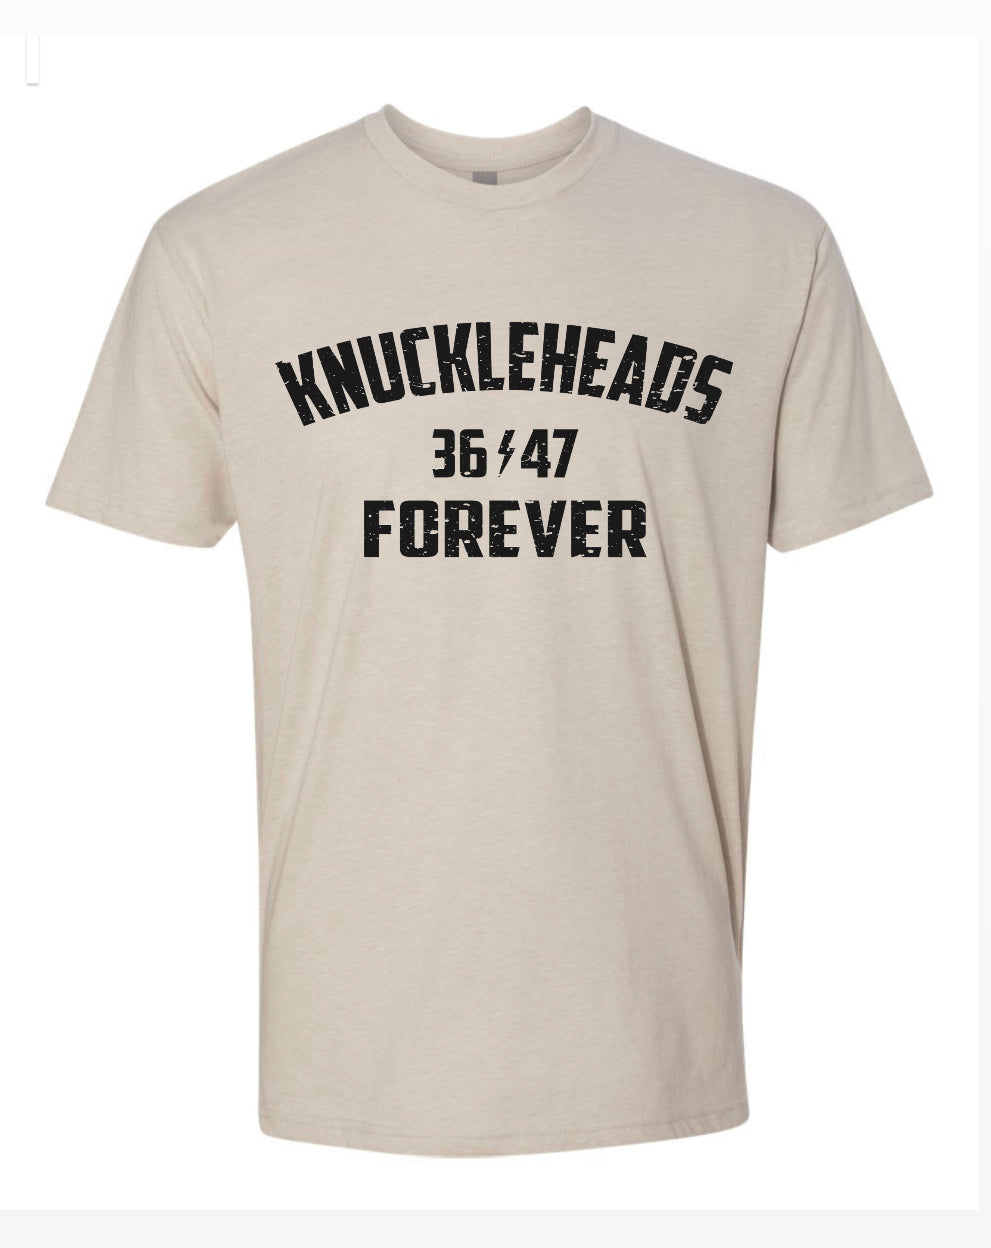 Knuckleheads Forever